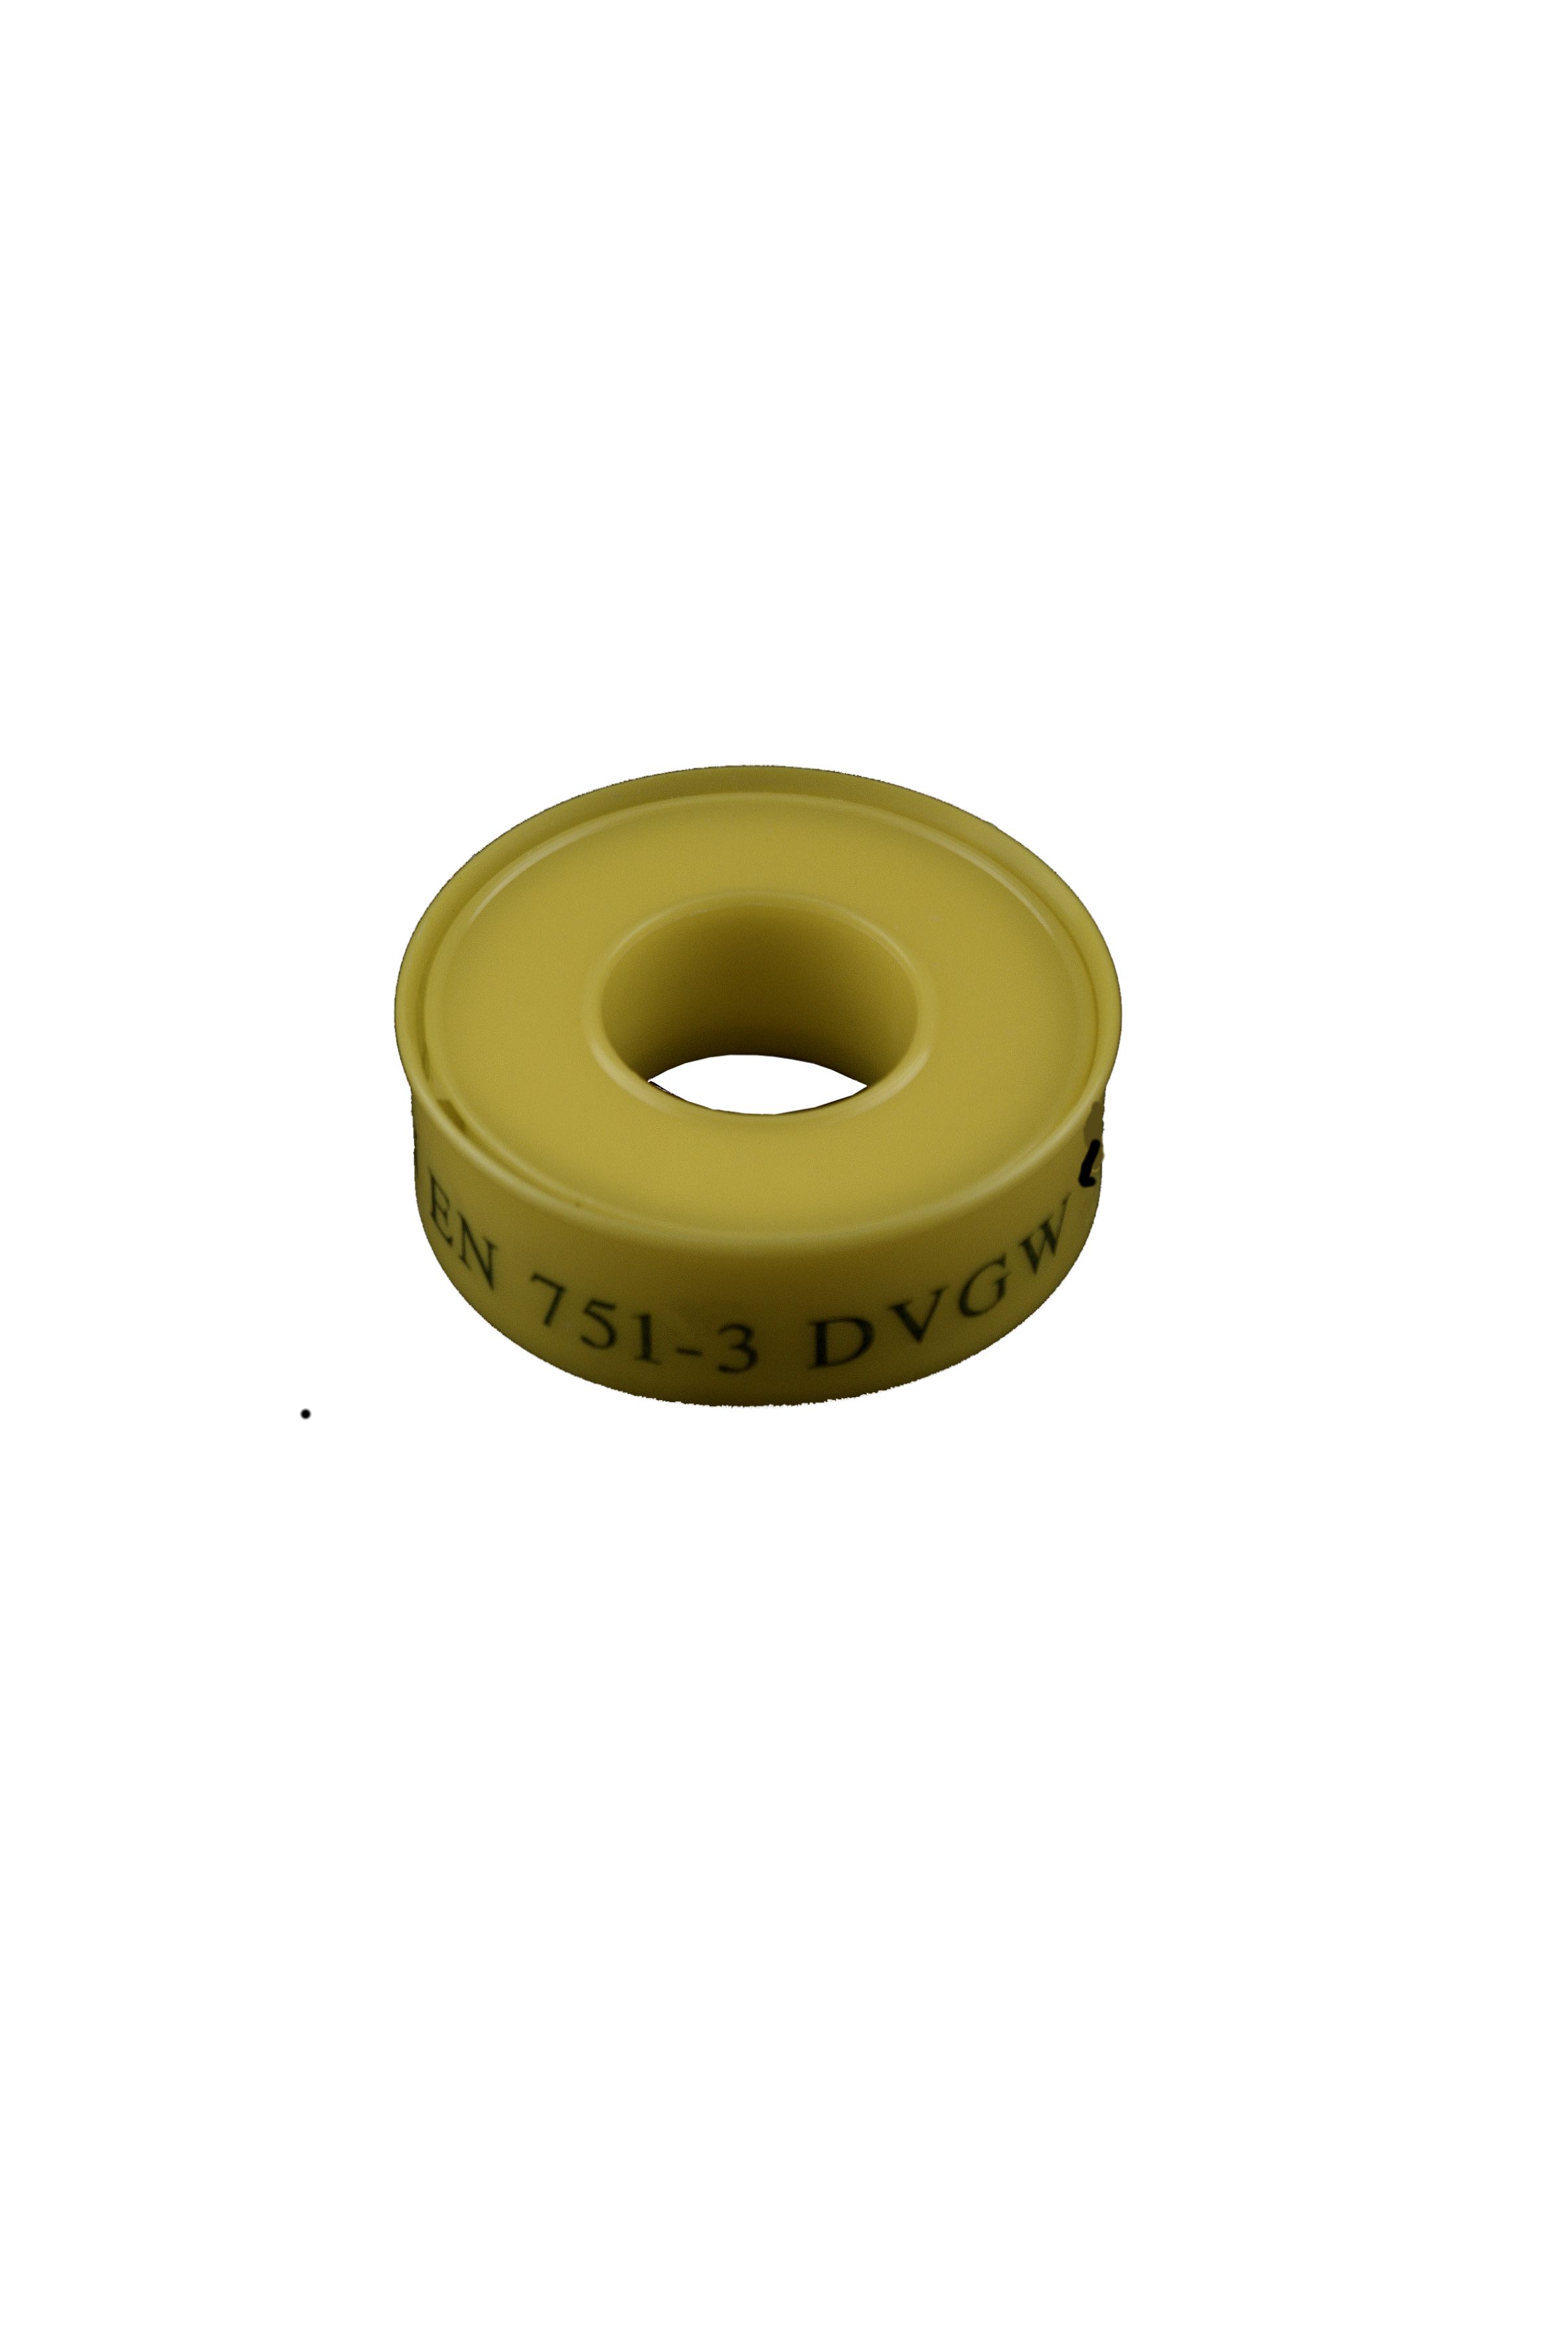 Teflonband / Gewindedichtband  12 mm breit  0,10 mm